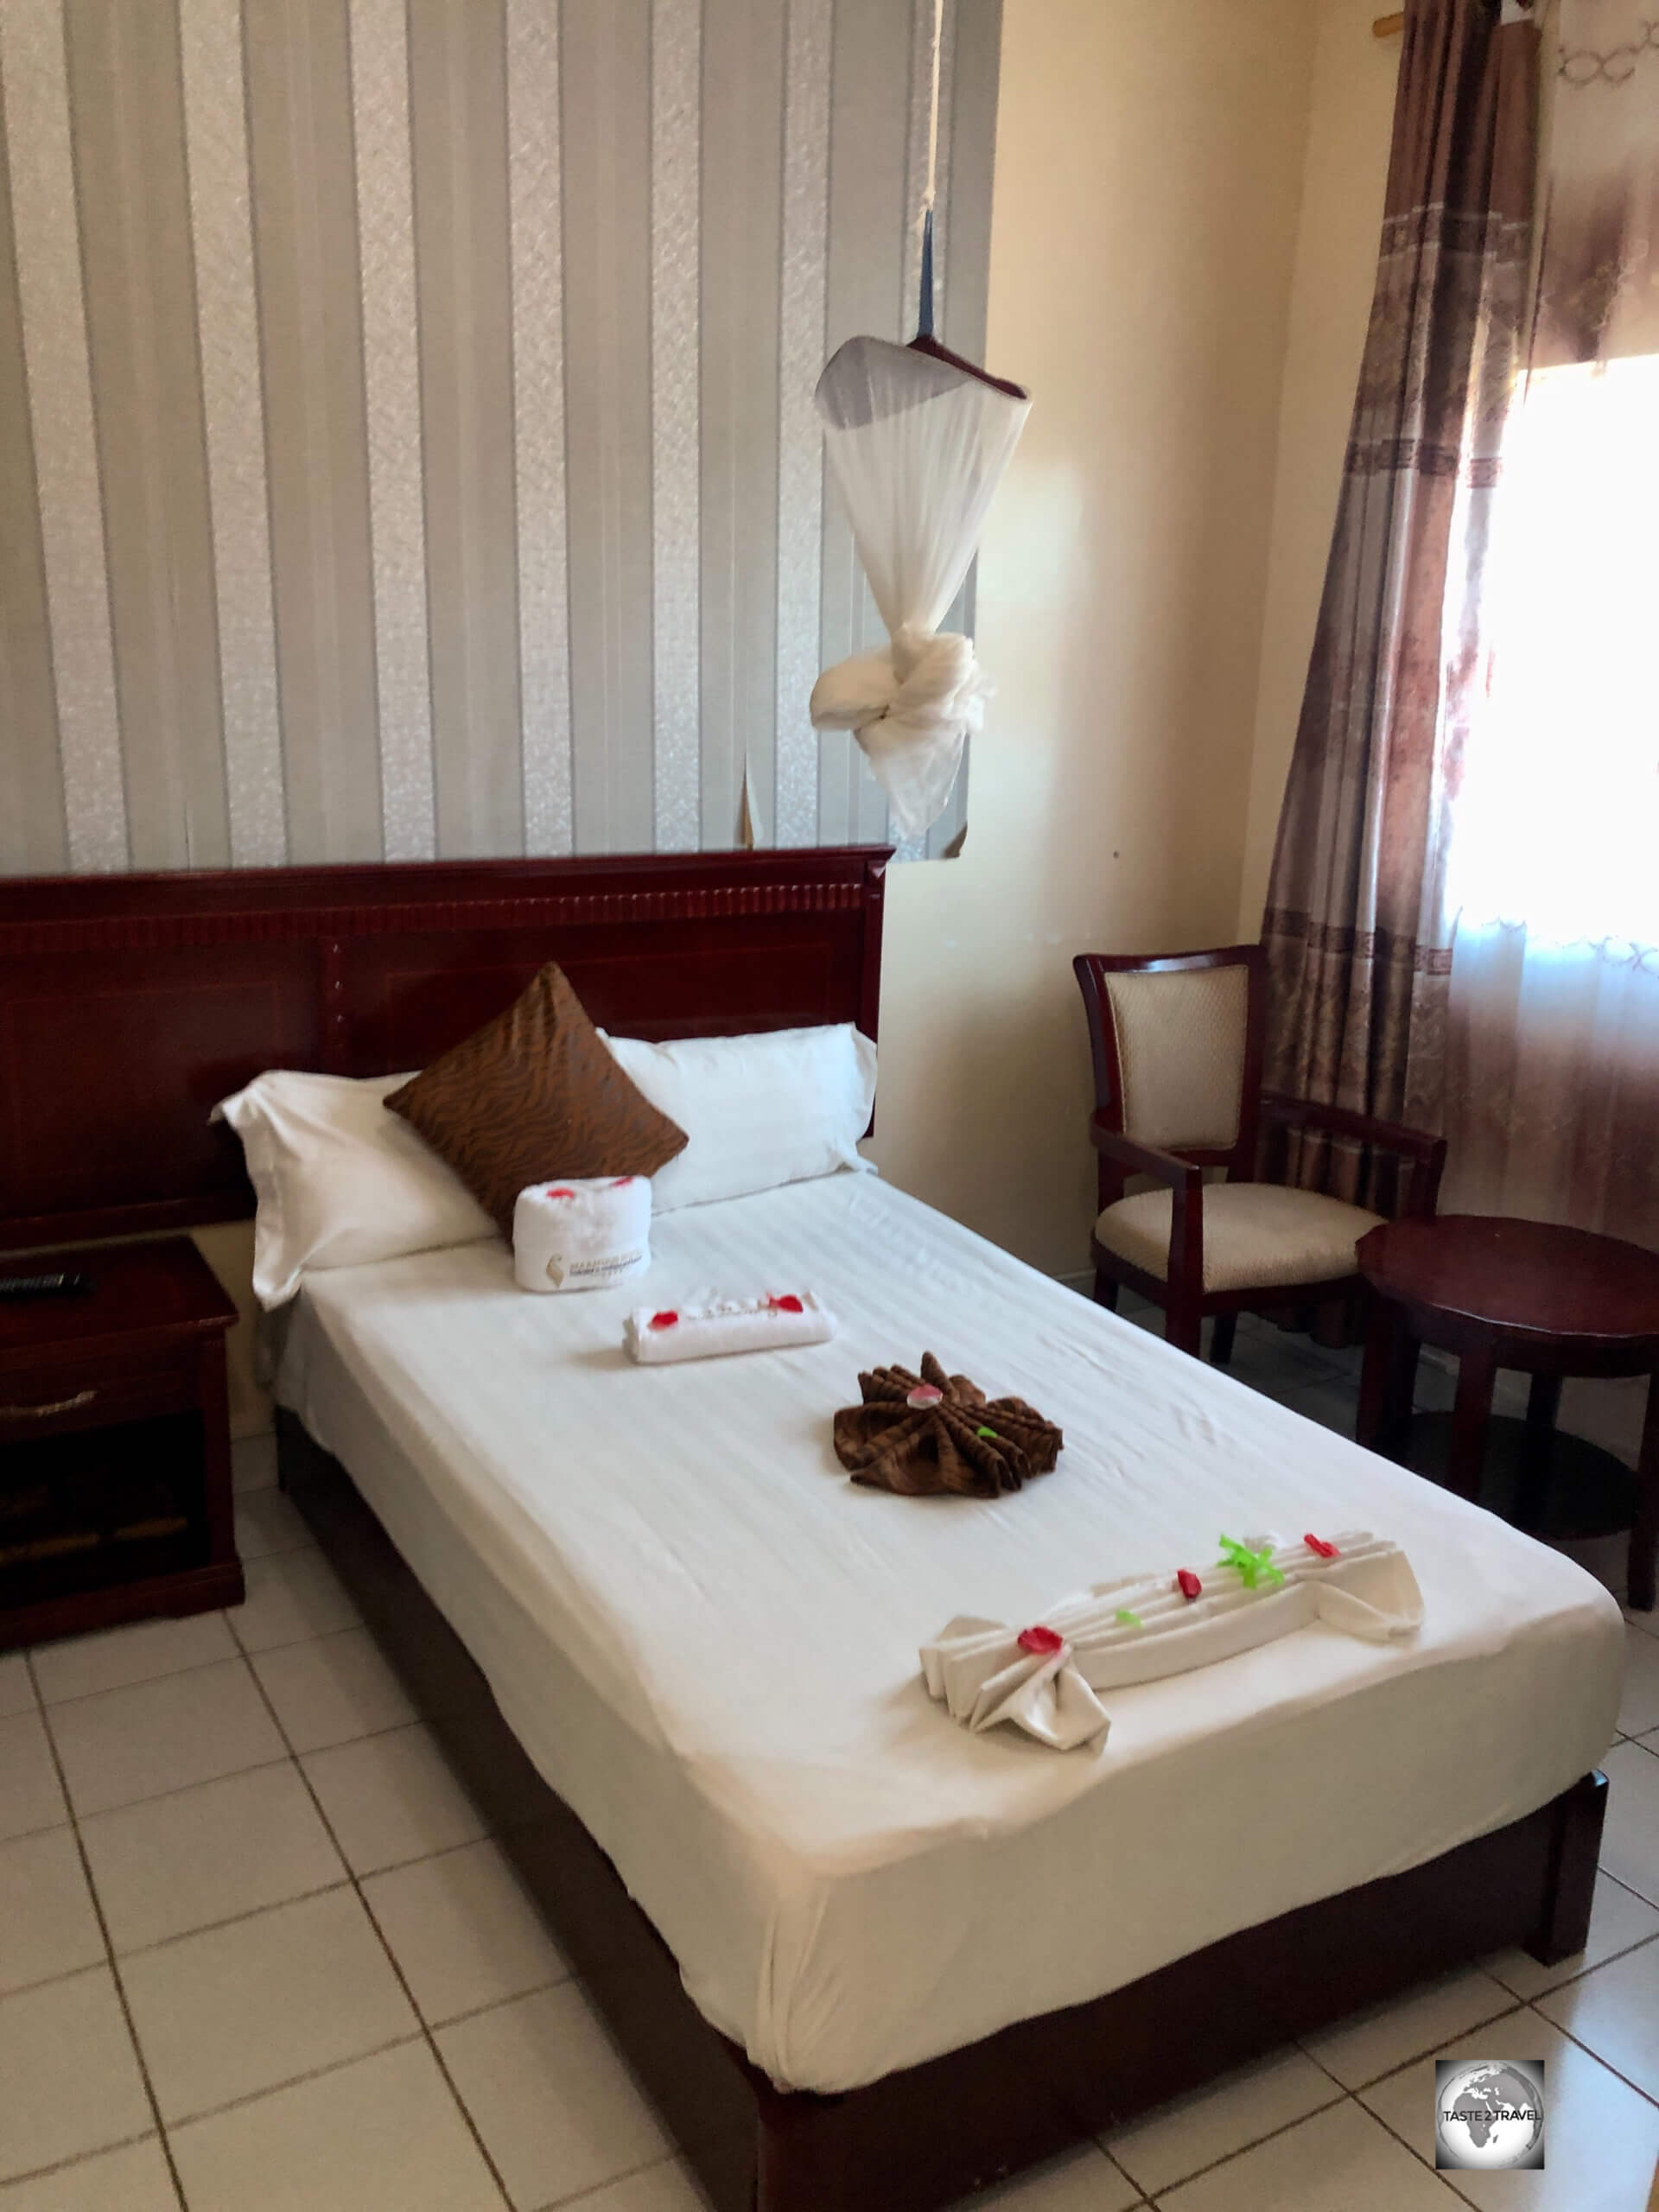 My room at the Maamuus Hotel in Hargeisa.